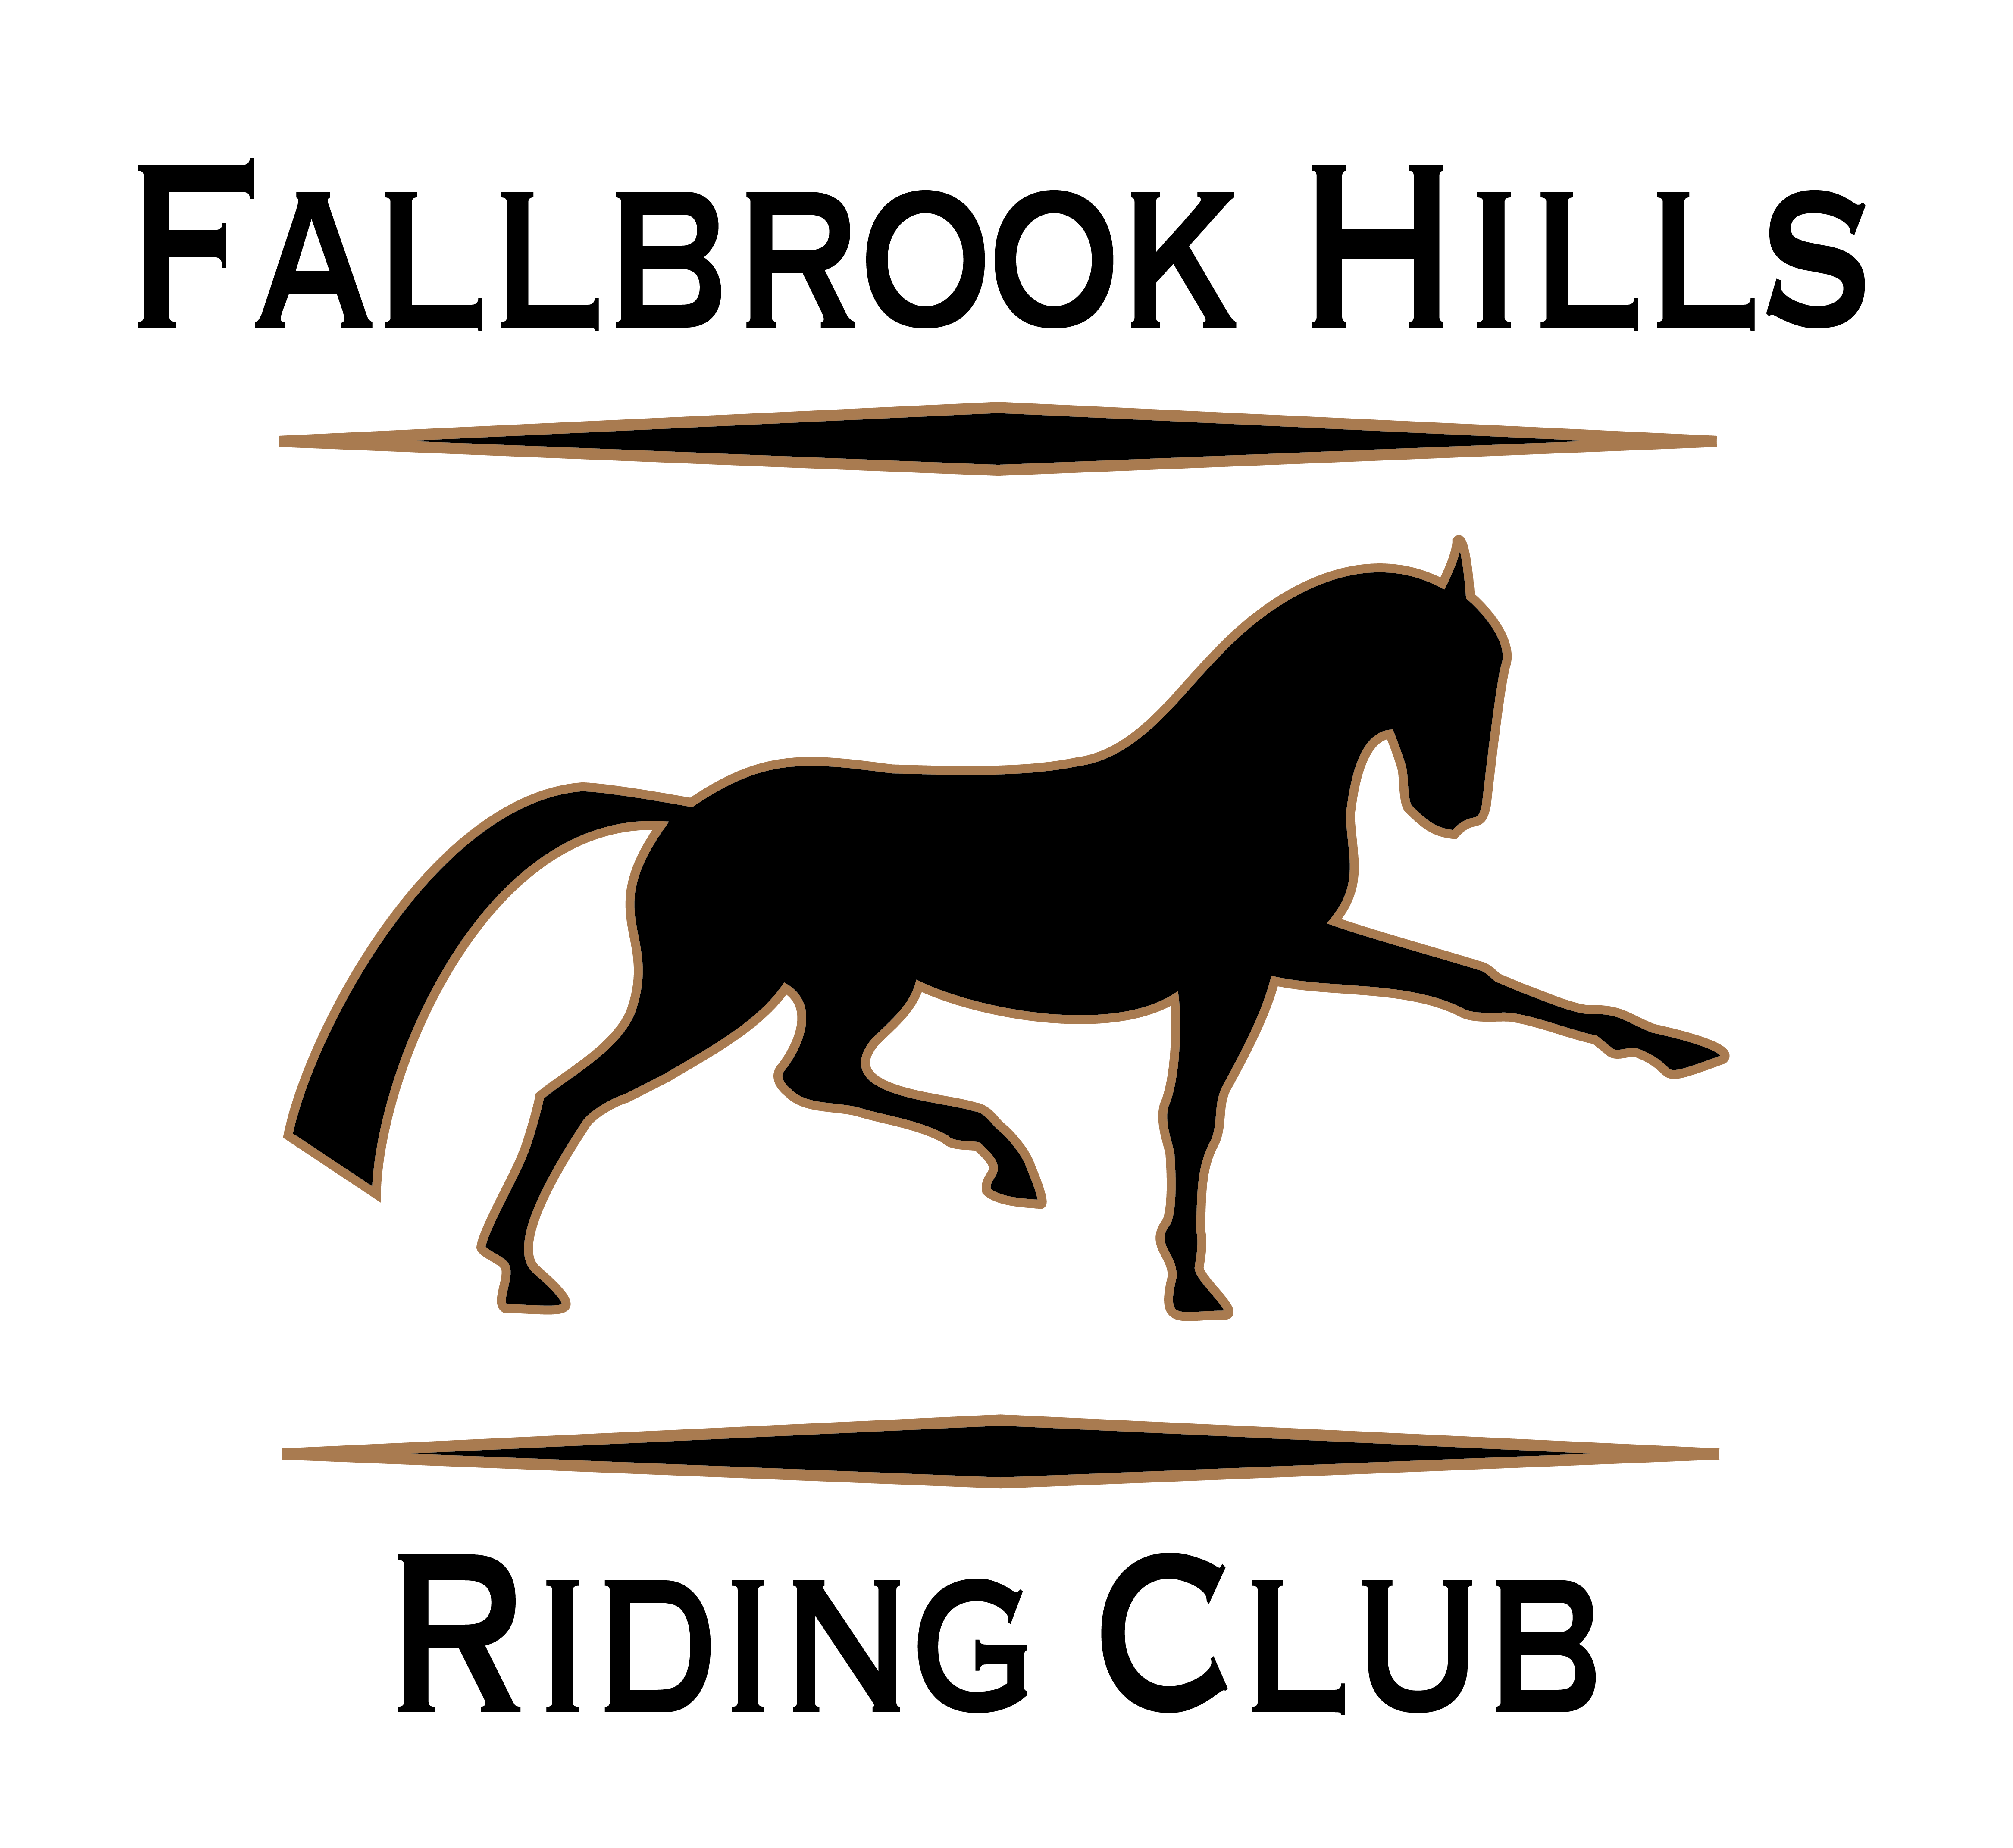 Fallbrook hills riding club logo dressage horse extended trot